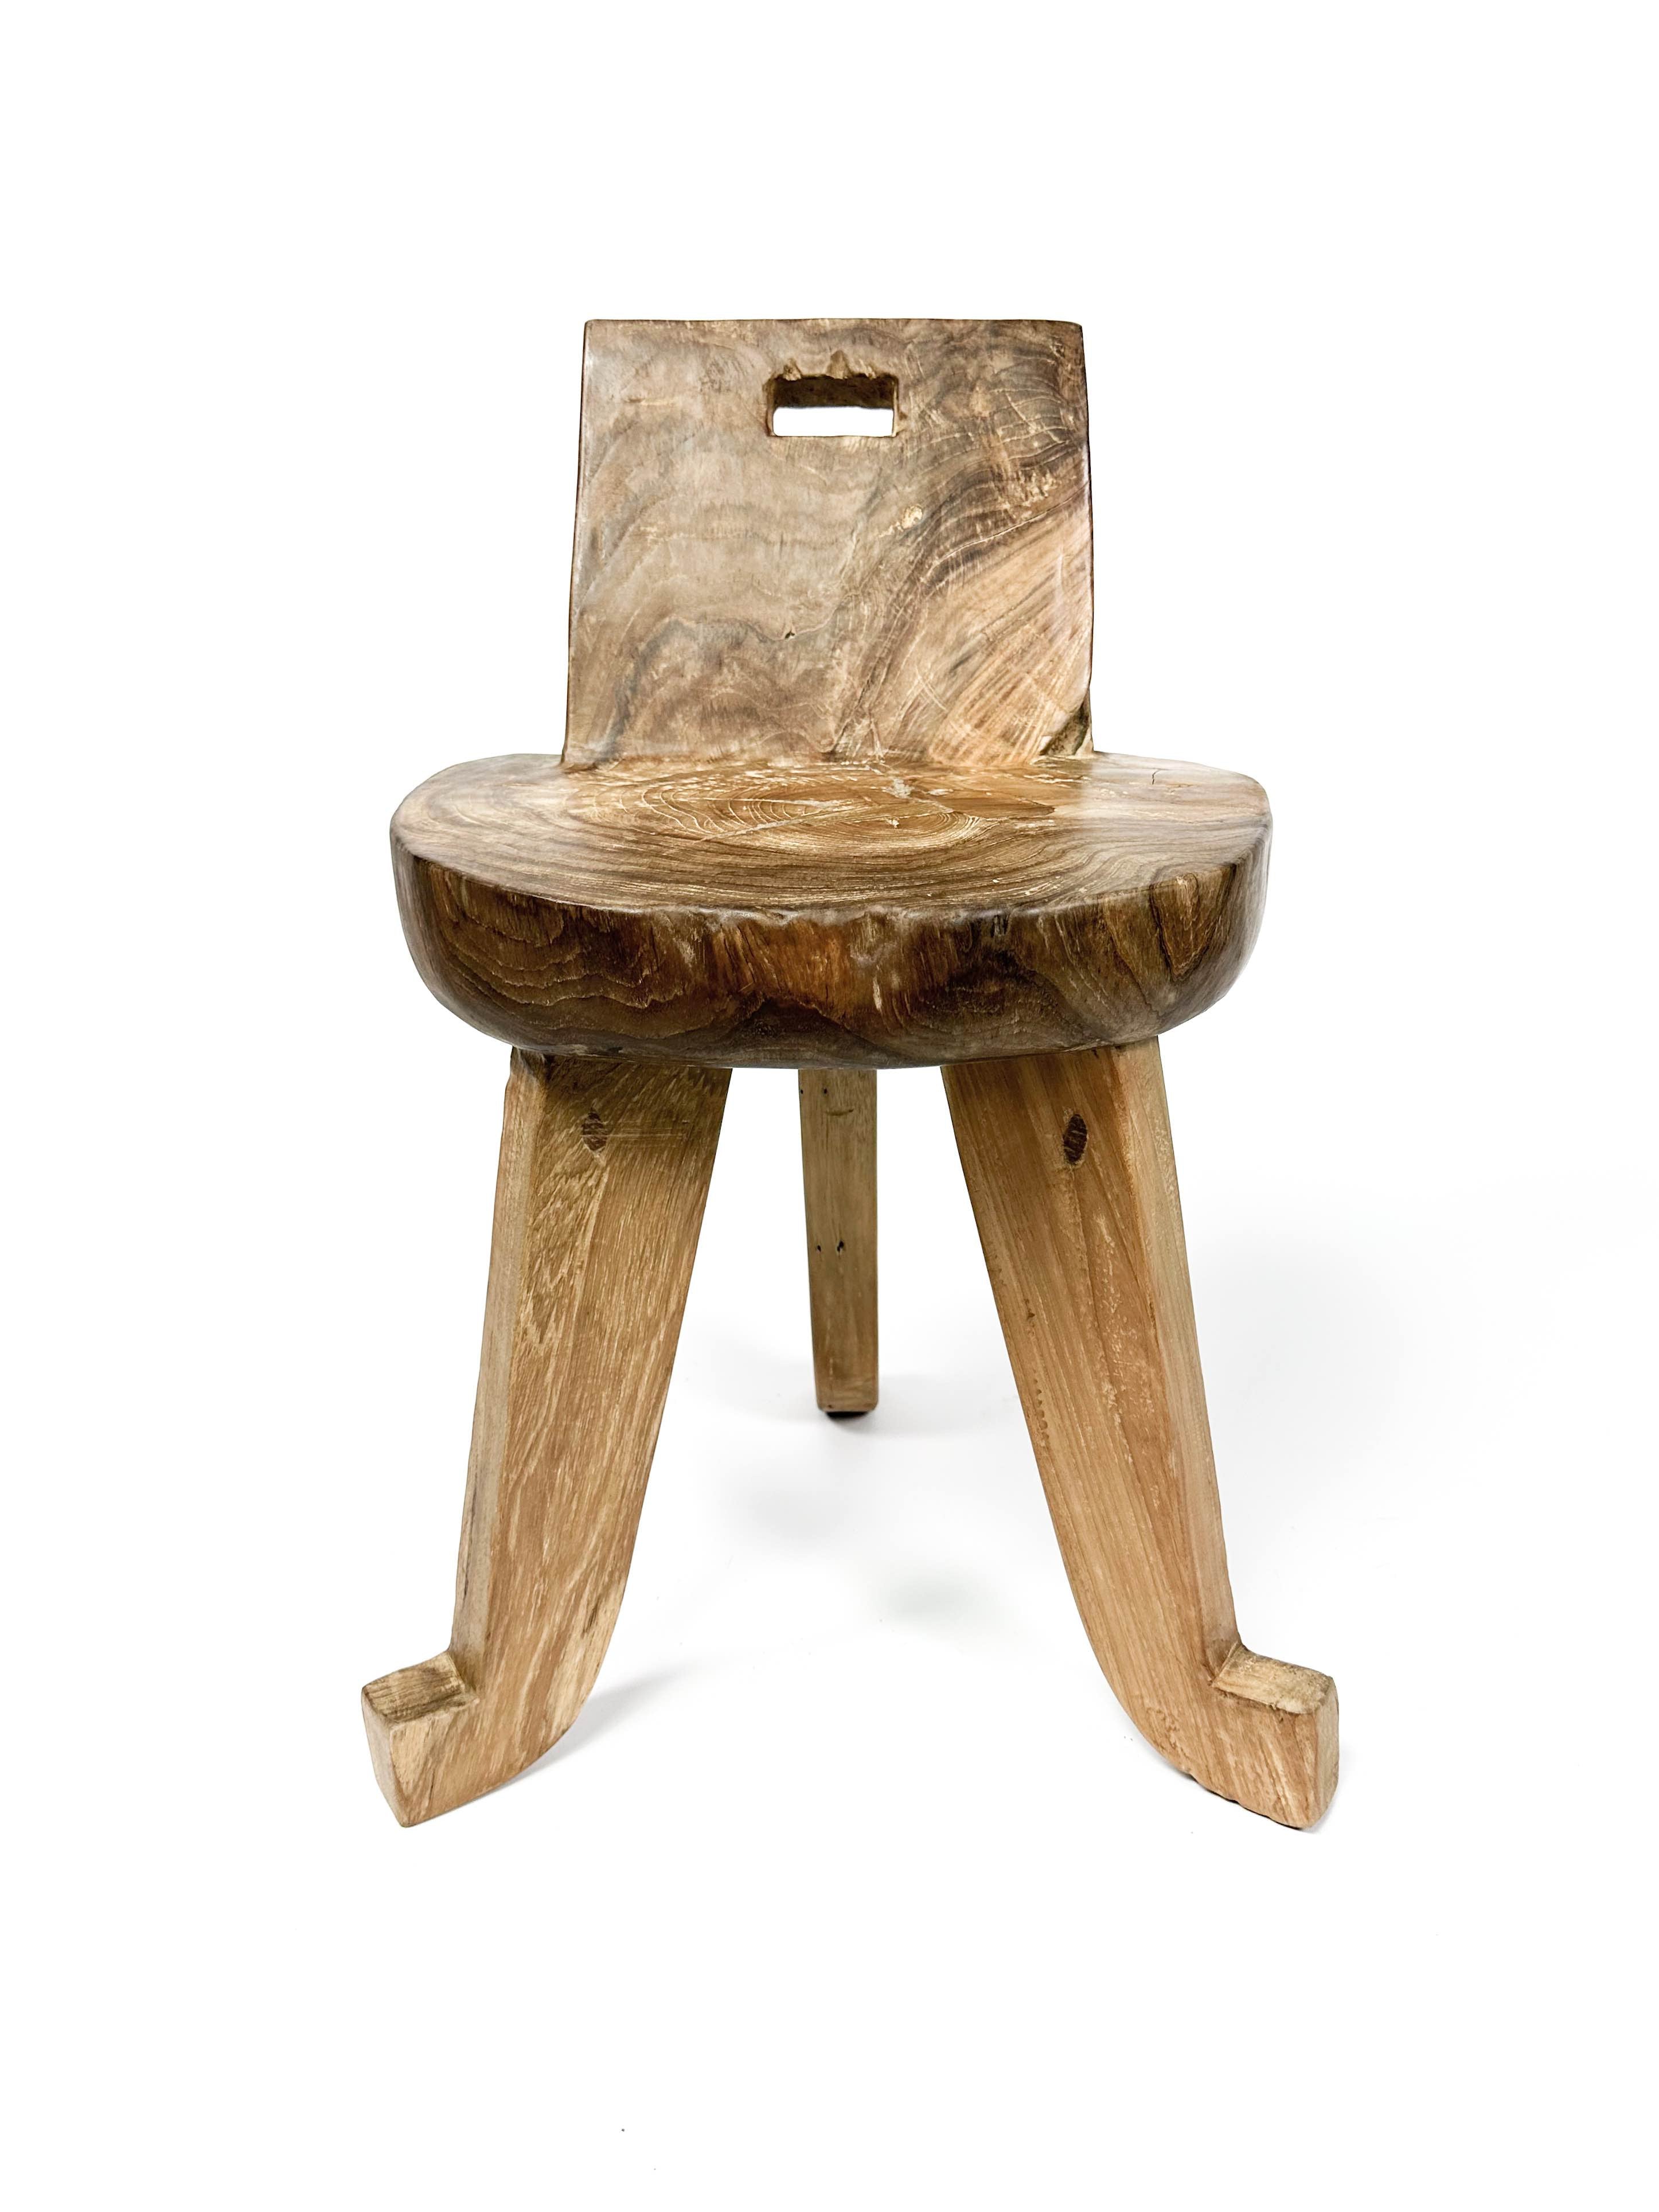 The small primitive teak chair #3